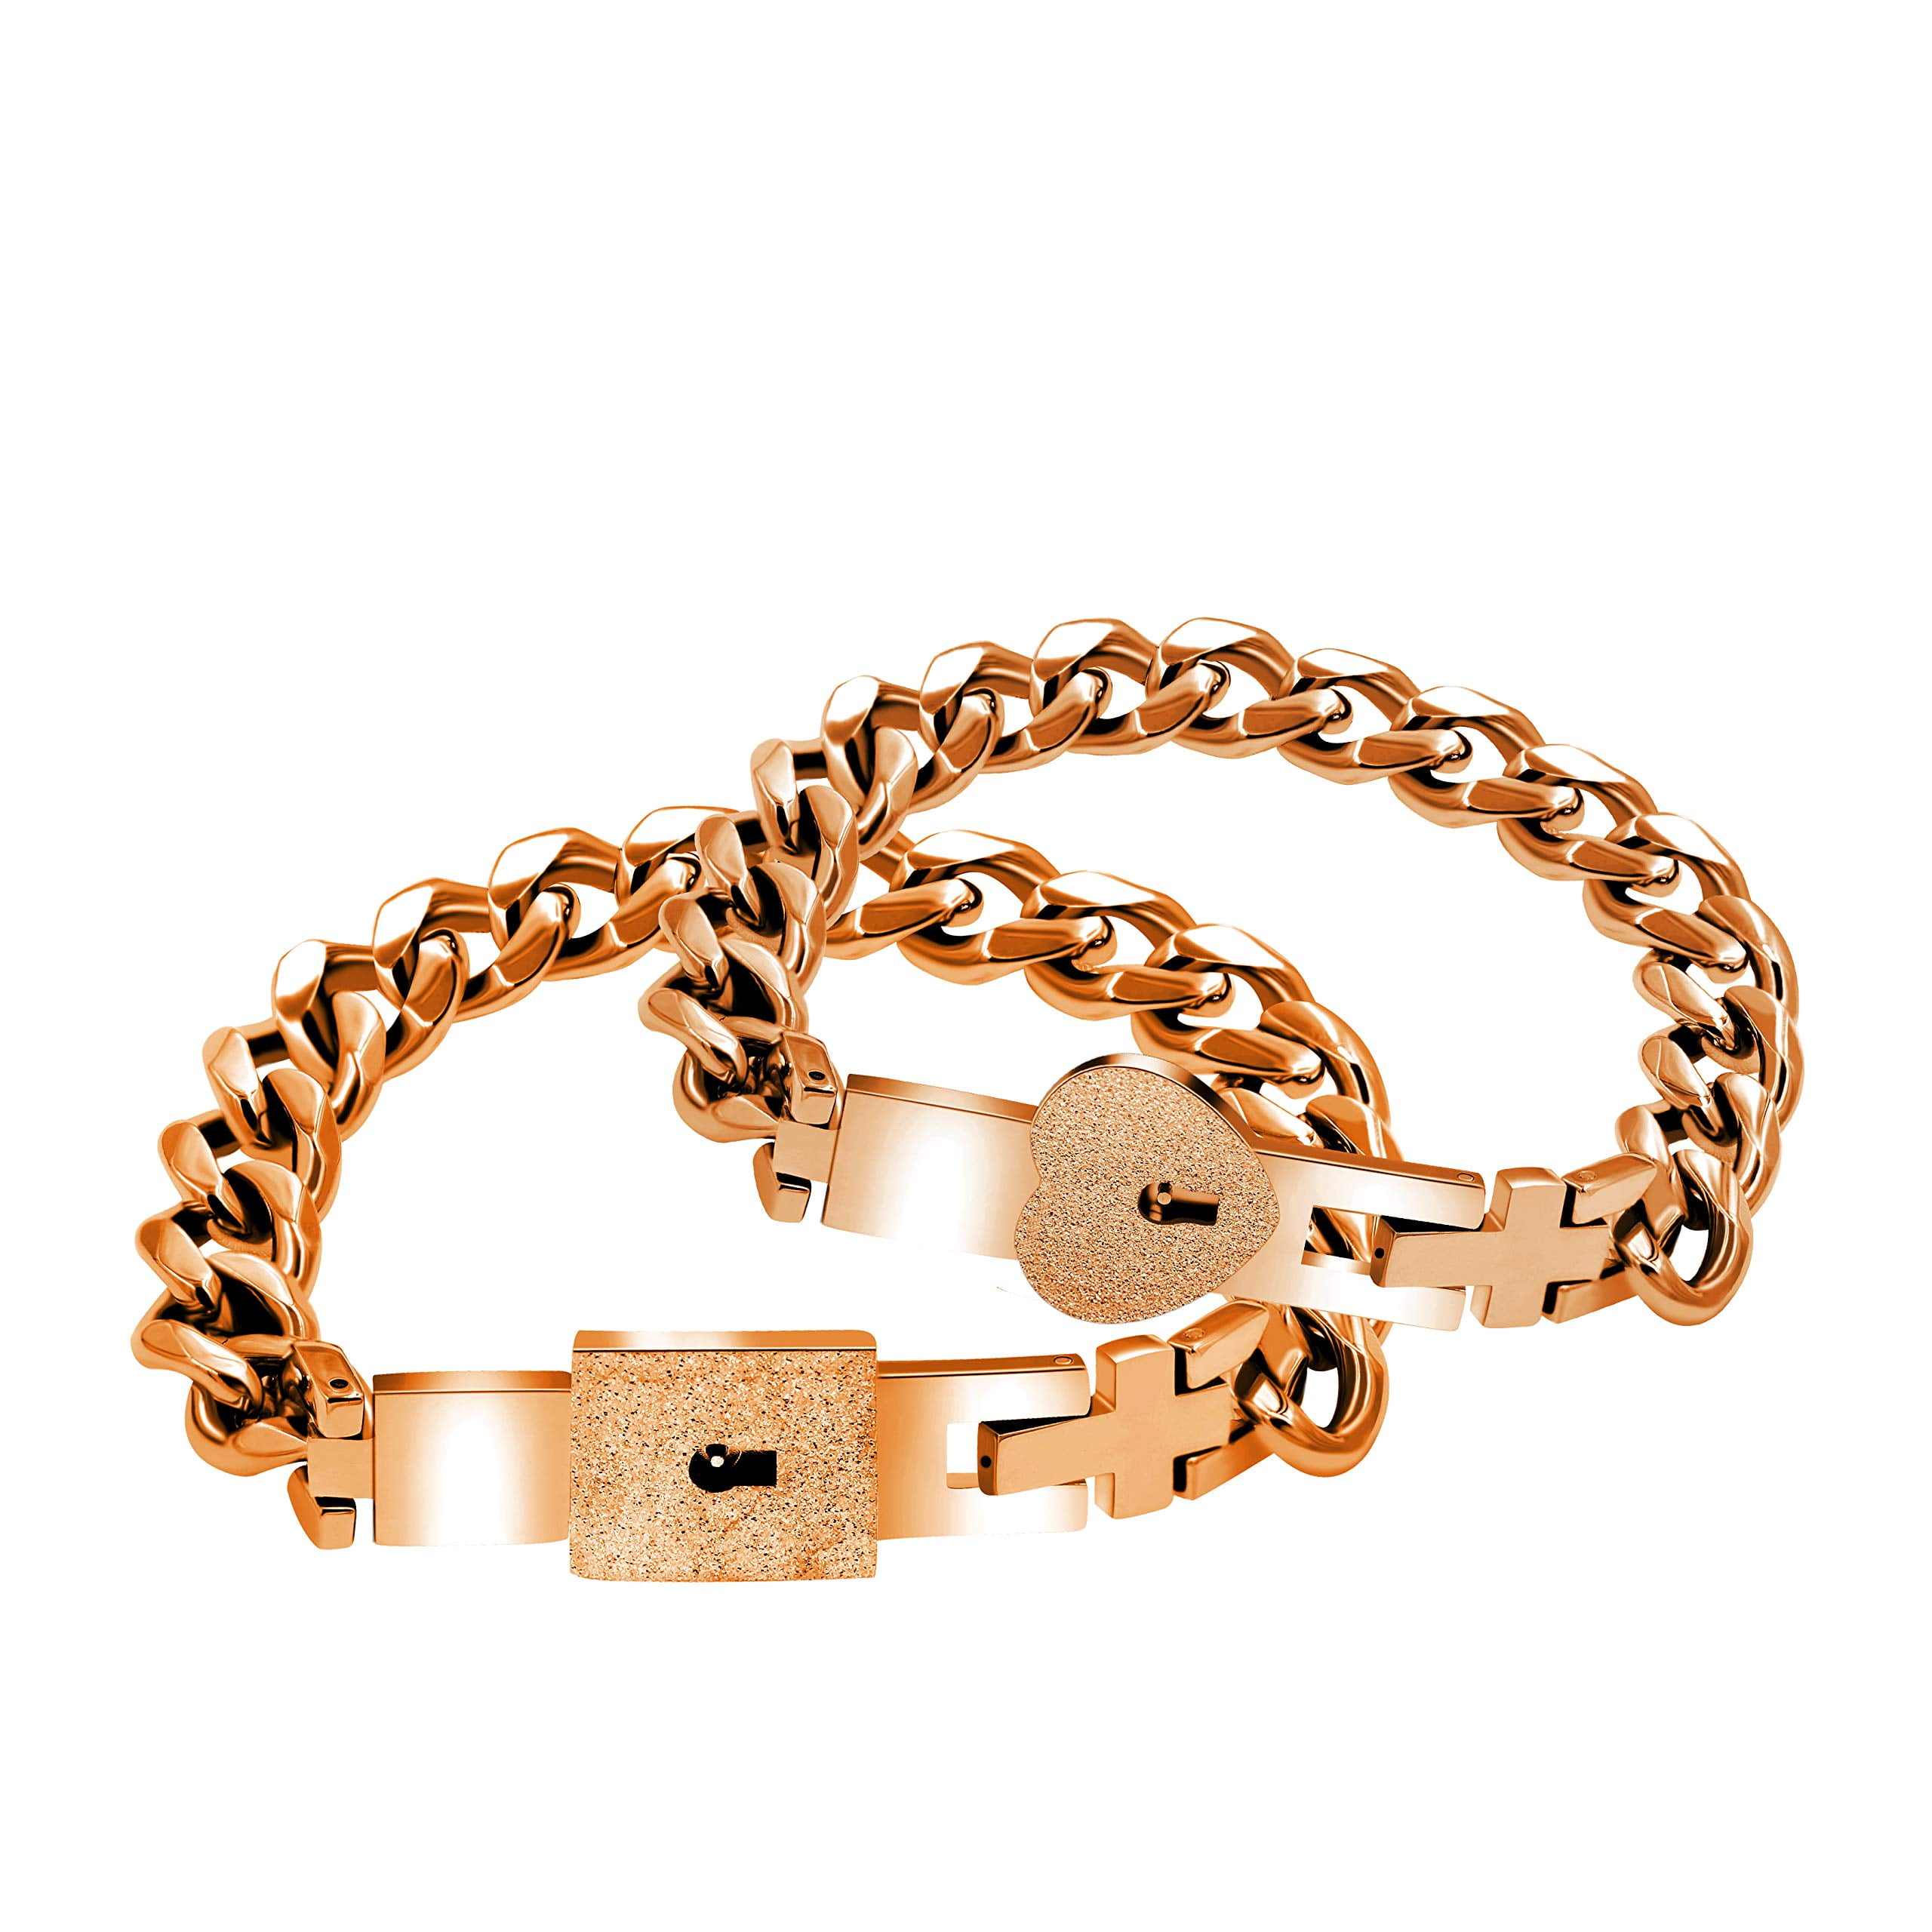 Louis Vuitton 18K White Gold Padlock & Square Link Bracelet